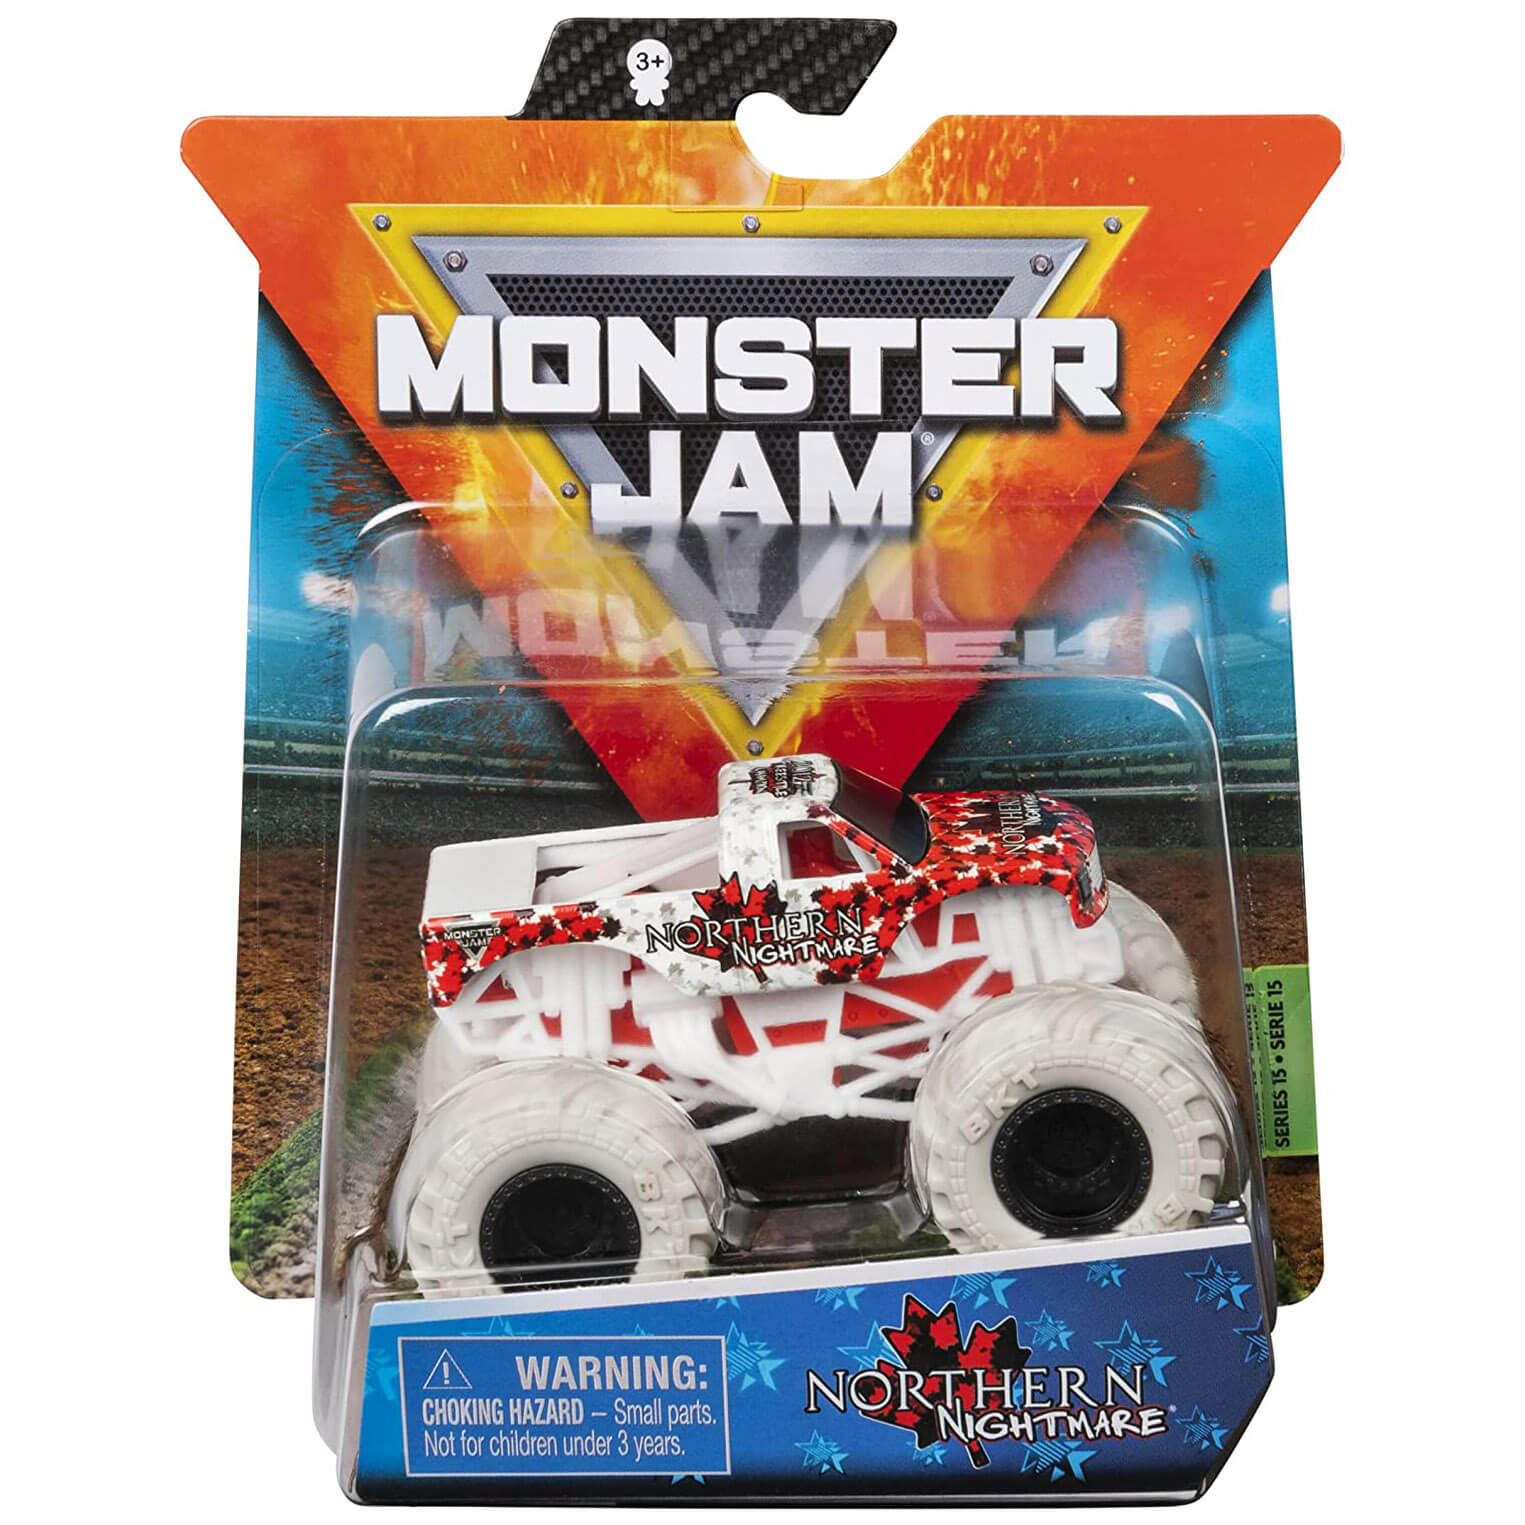 Monster Jam Northern Nightmare 1:64 Scale Diecast Vehicle